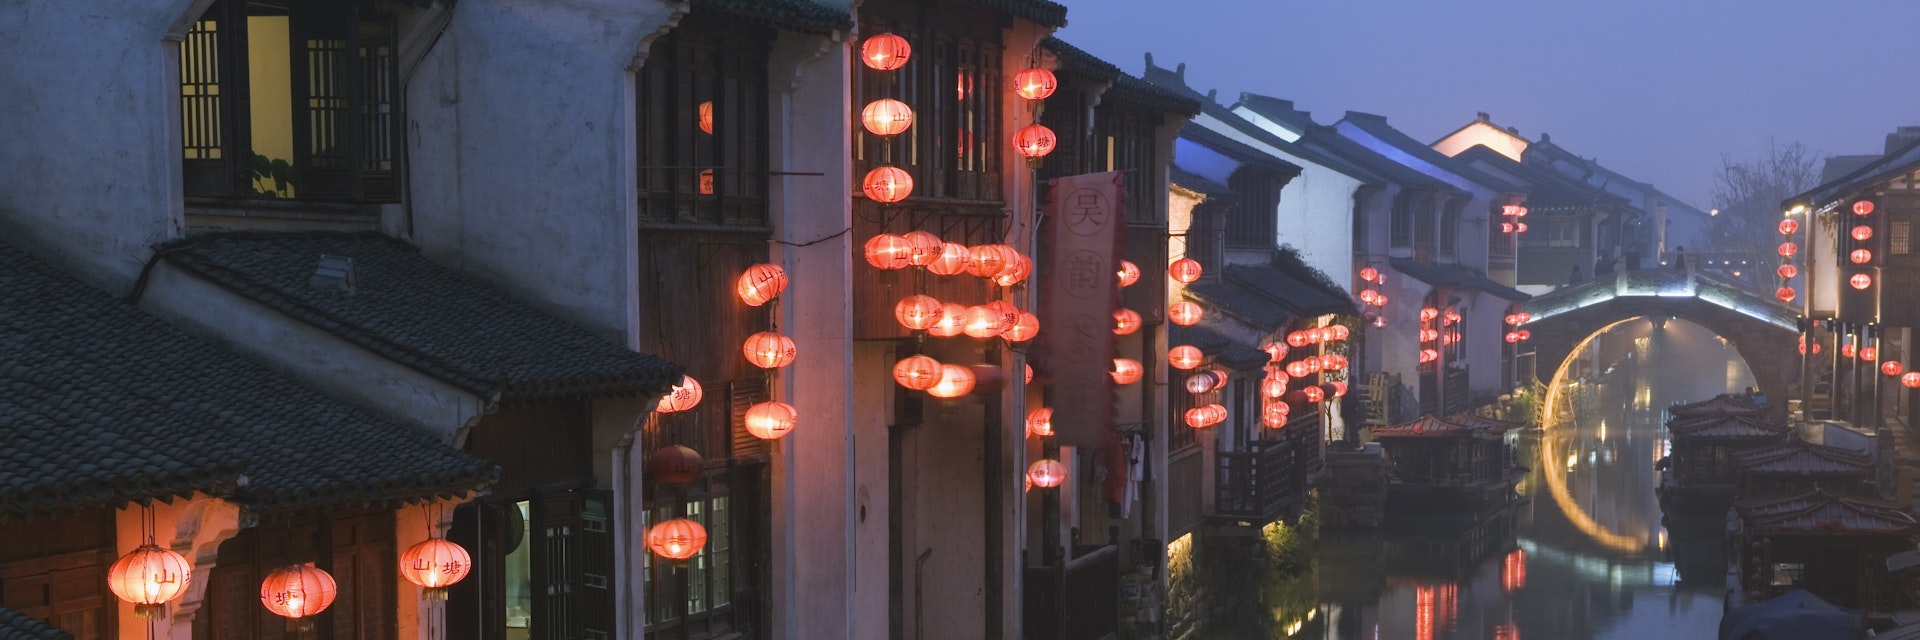 Traditional old riverside houses illuminated at night in Shantang water town, Suzhou, Jiangsu Province, China, Asia